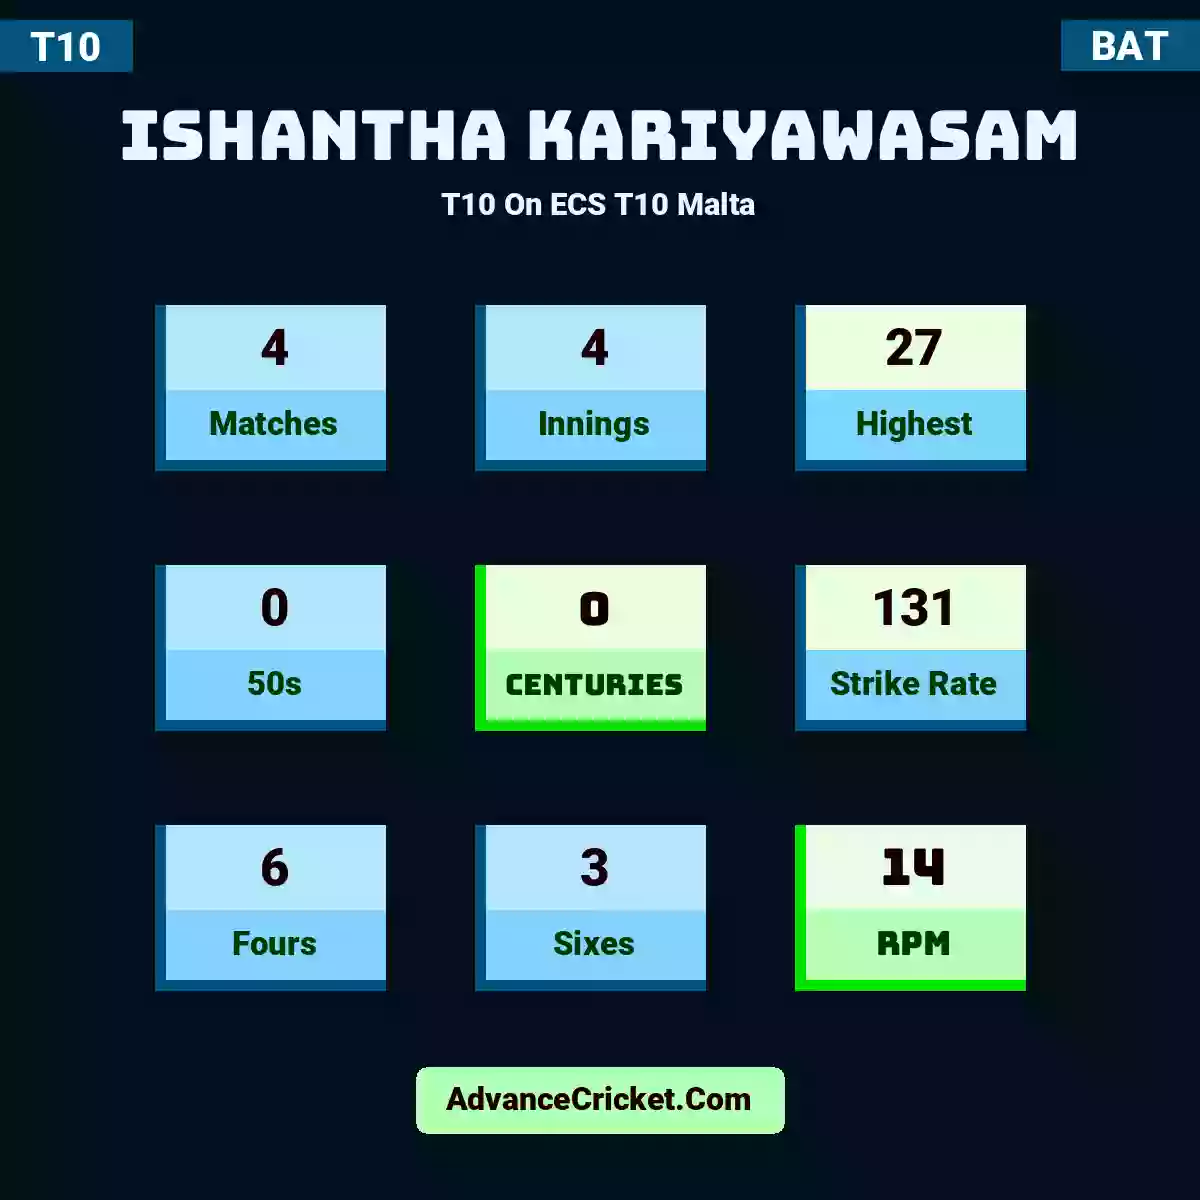 Ishantha Kariyawasam T10  On ECS T10 Malta, Ishantha Kariyawasam played 4 matches, scored 27 runs as highest, 0 half-centuries, and 0 centuries, with a strike rate of 131. I.Kariyawasam hit 6 fours and 3 sixes, with an RPM of 14.